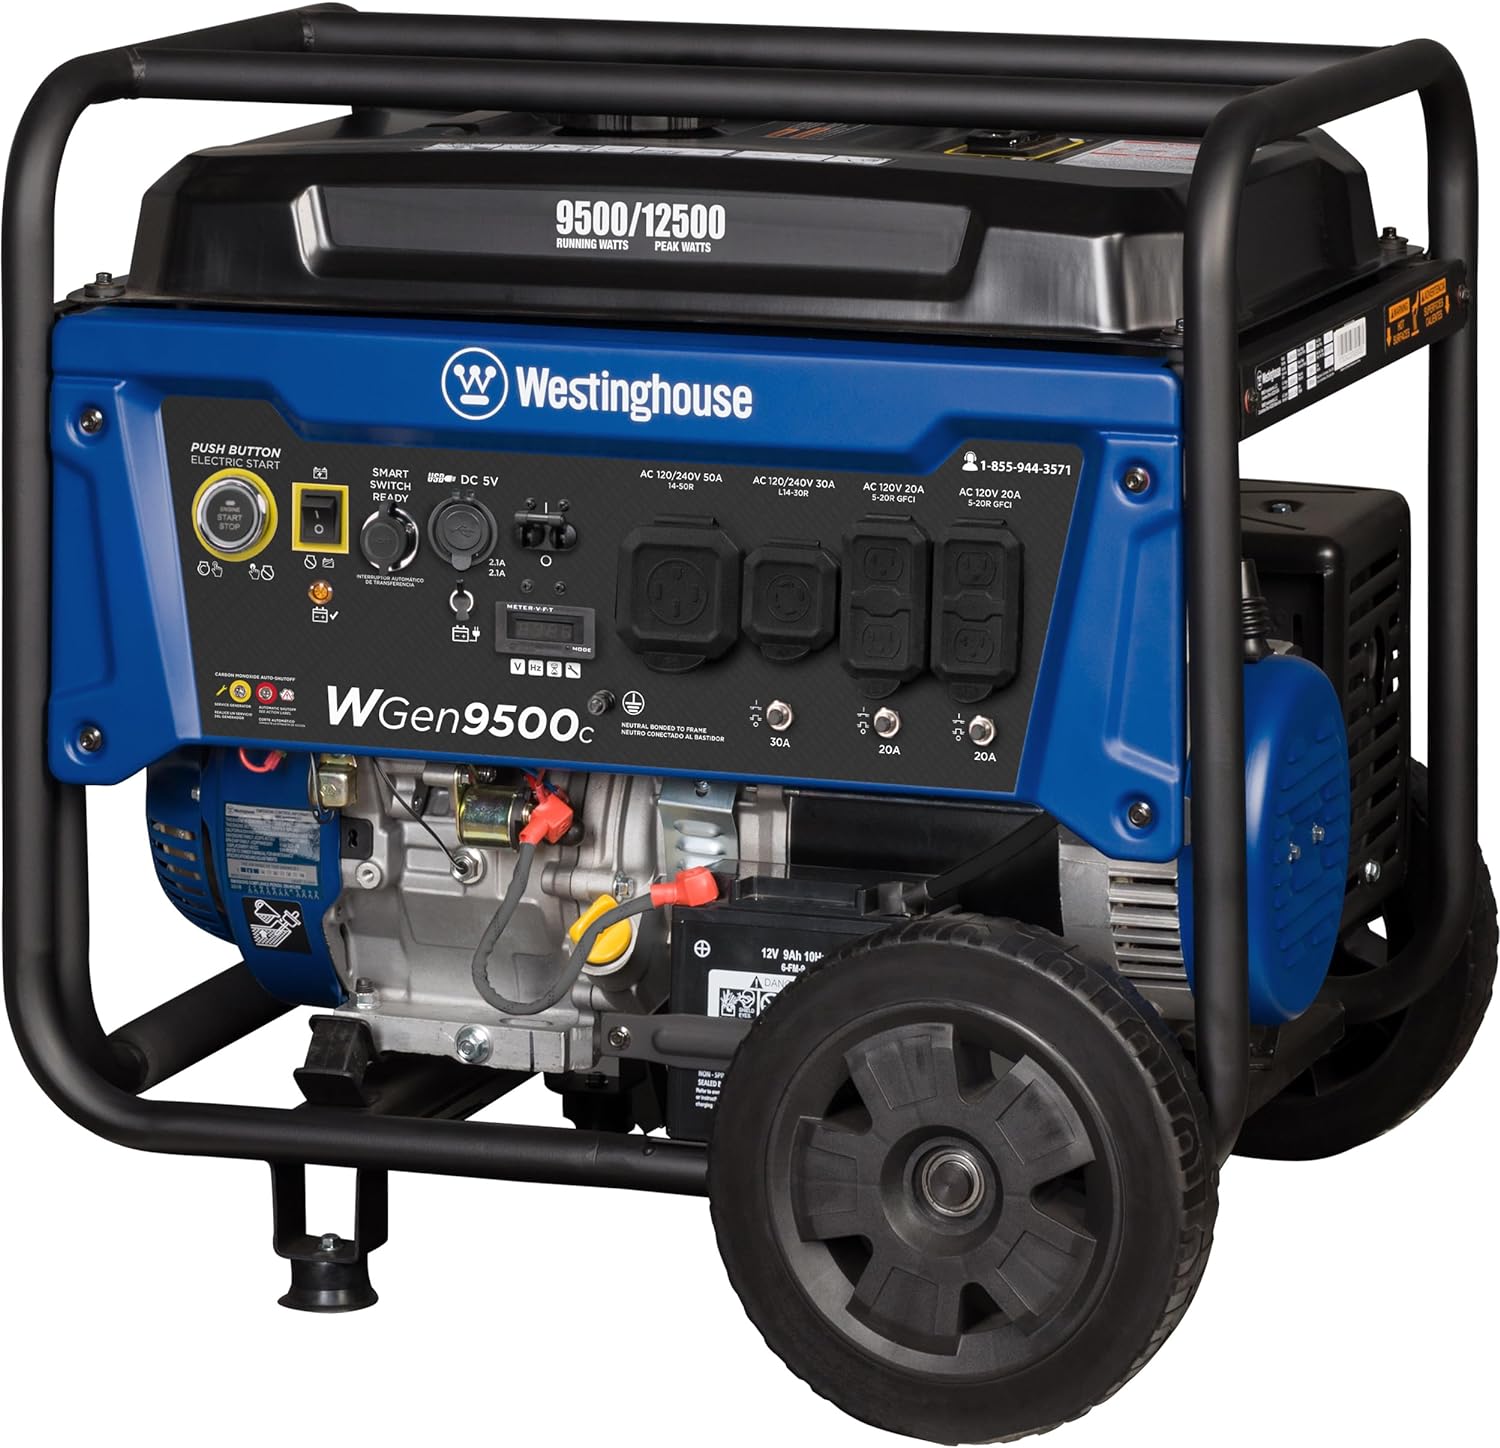 Westinghouse WGen9500c Generator 9500W/12500W 50 Amp Remote Start Gas with CO Sensor New